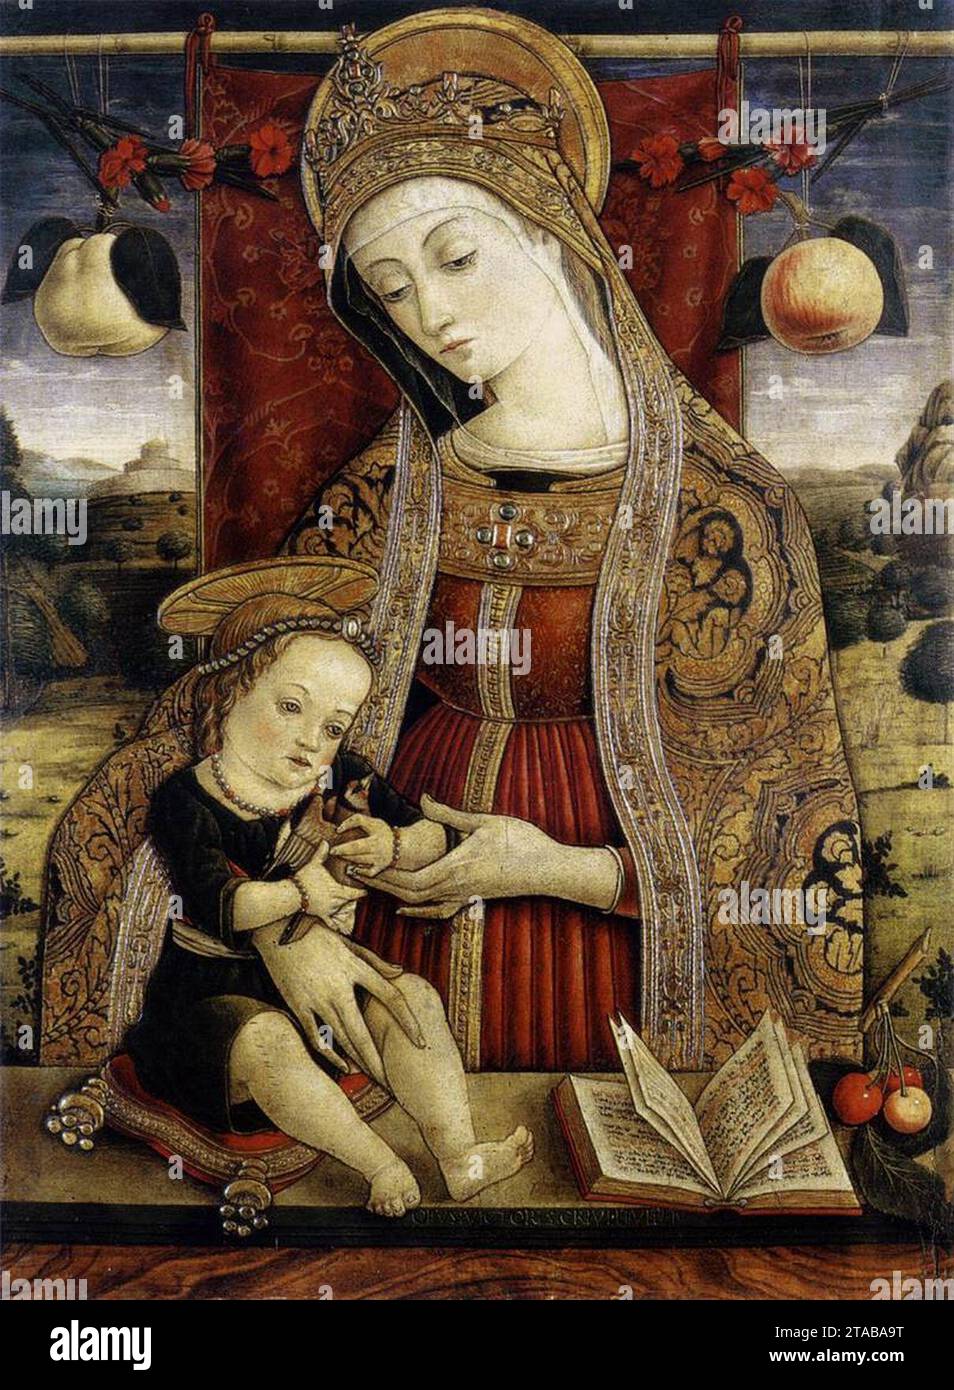 Vittore Crivelli - Madonna and Child Stock Photo